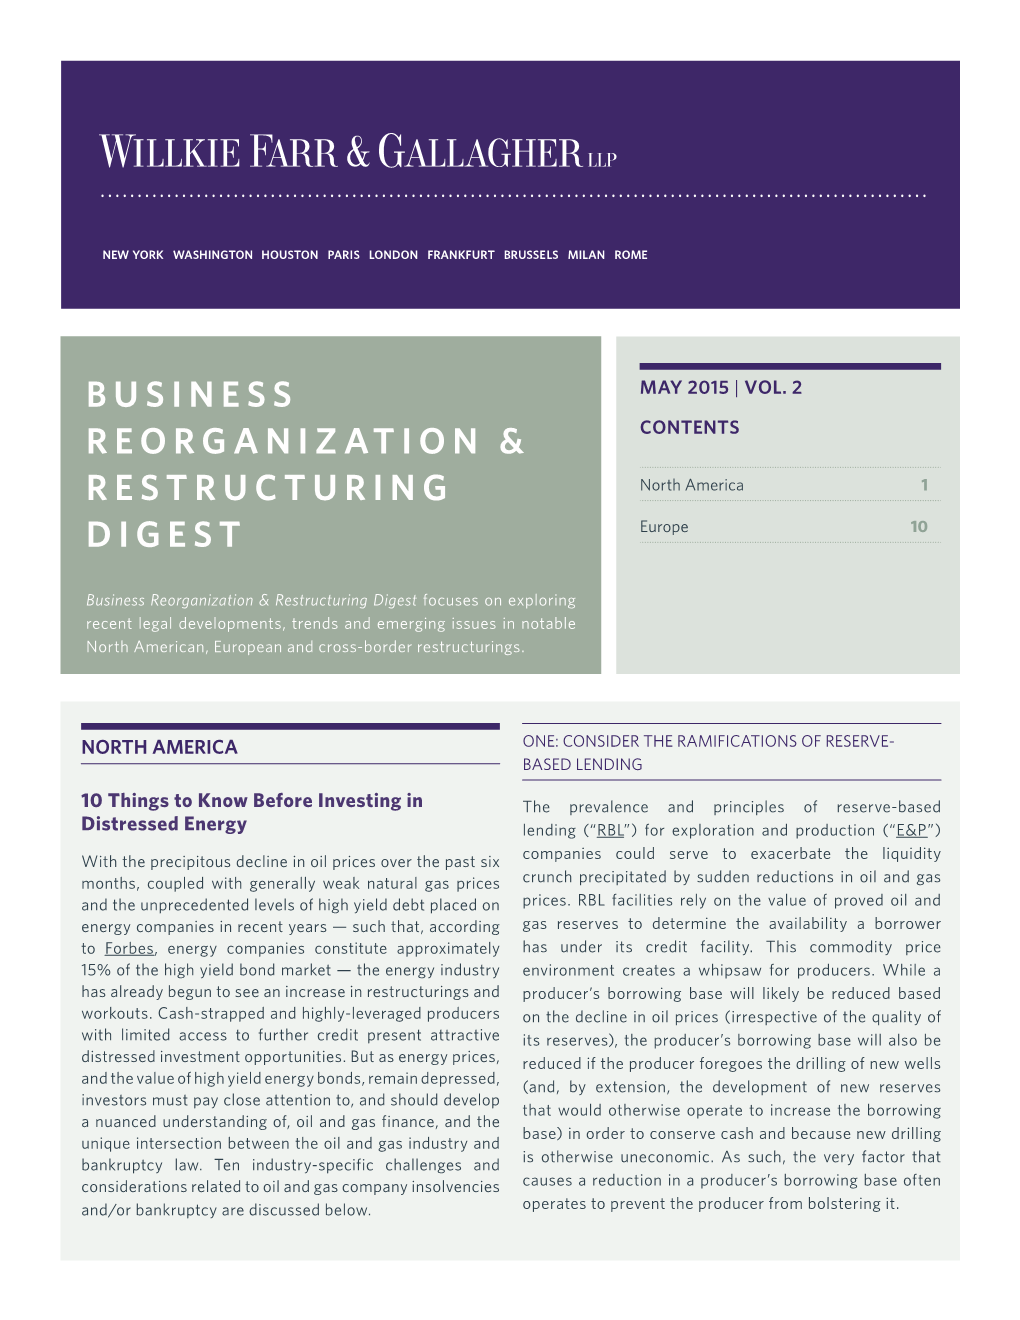 Business Reorganization & Restructuring Digest